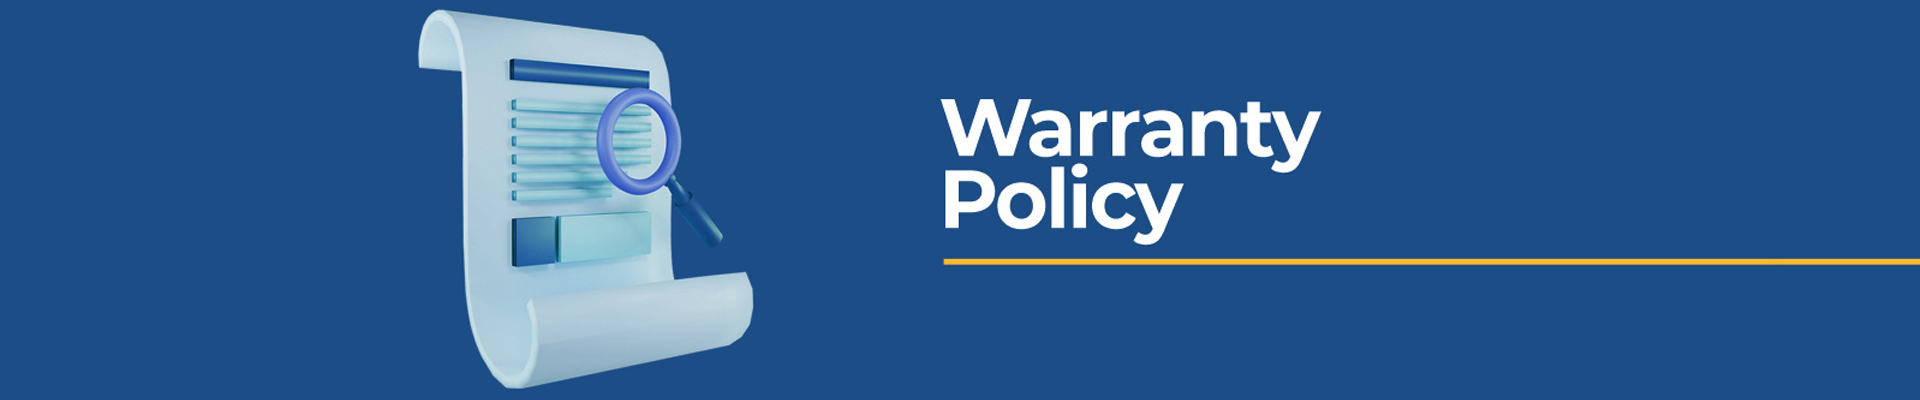 Warranty Policy - DIGI TV Box